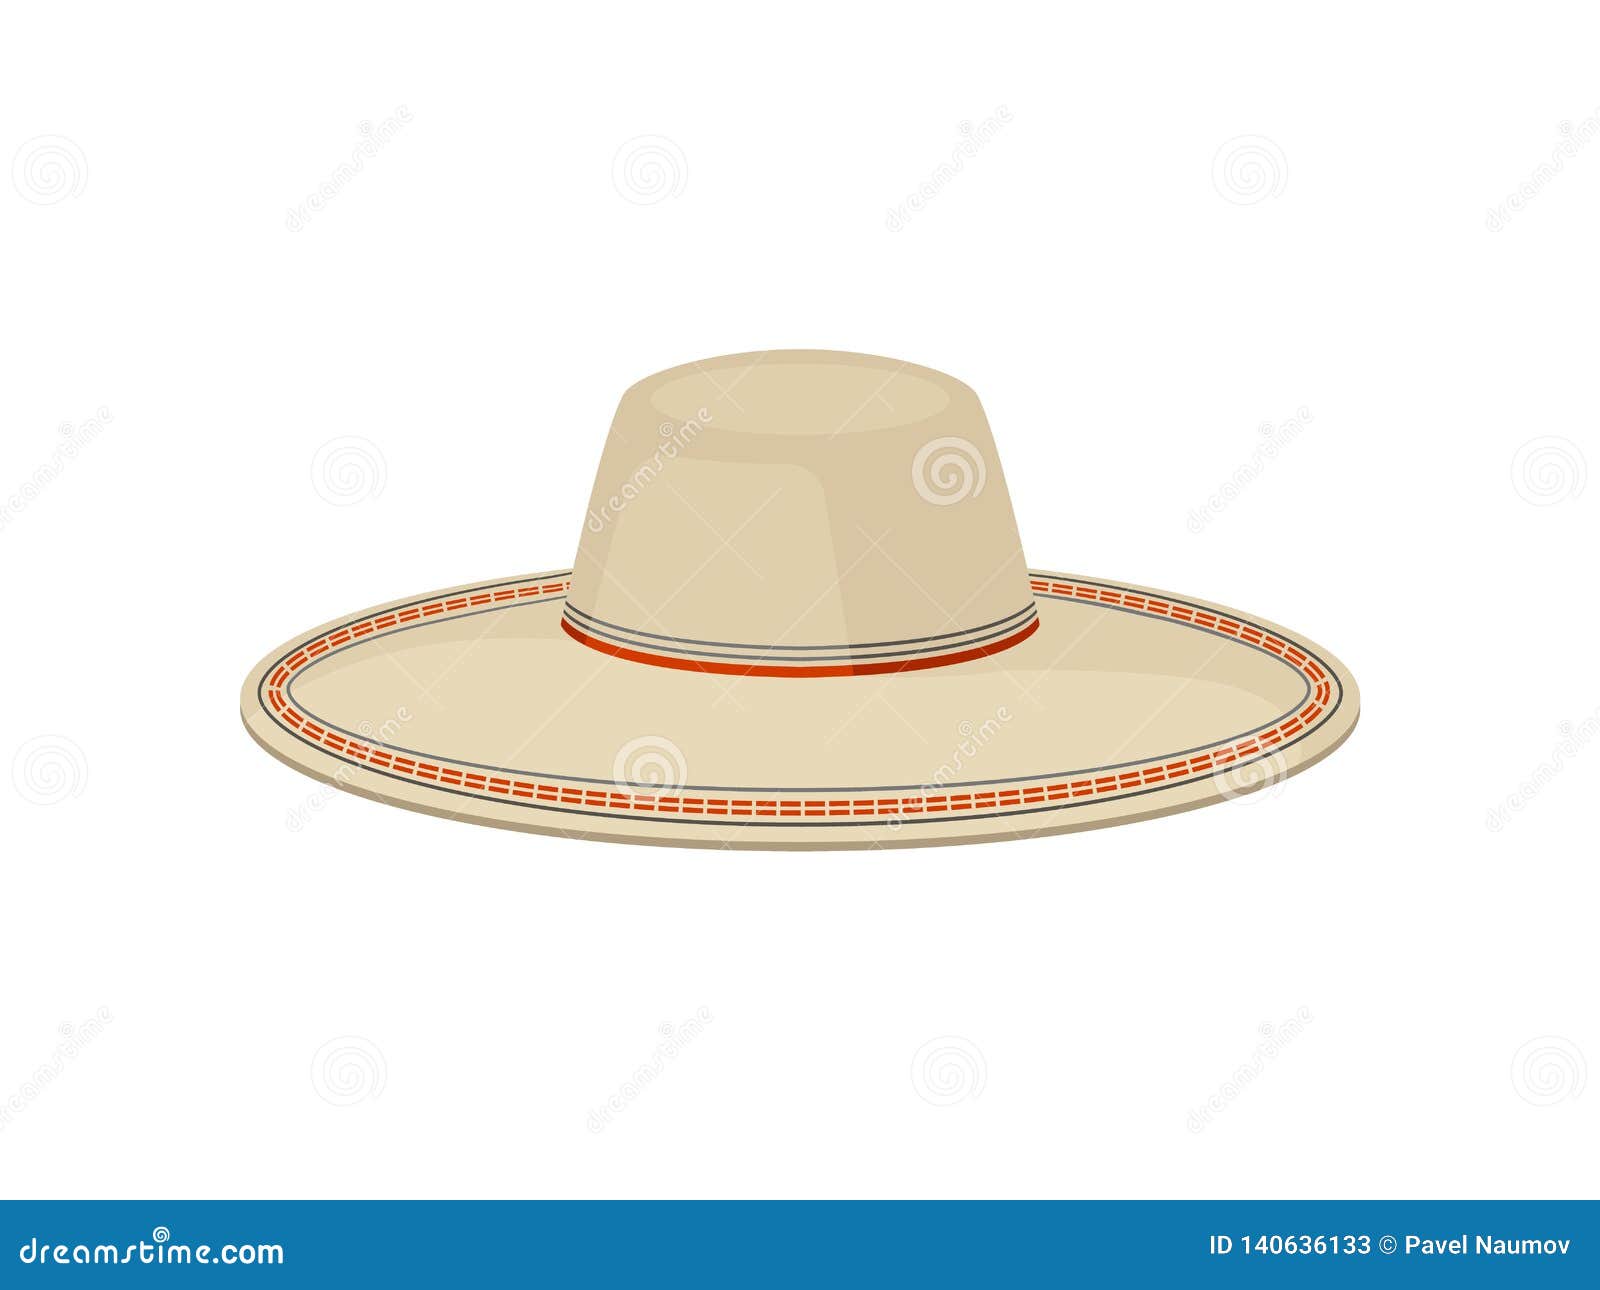 flat  of traditional panama hat for men. sombrero vaquero. stylish wide-brimmed headdress. fashion theme